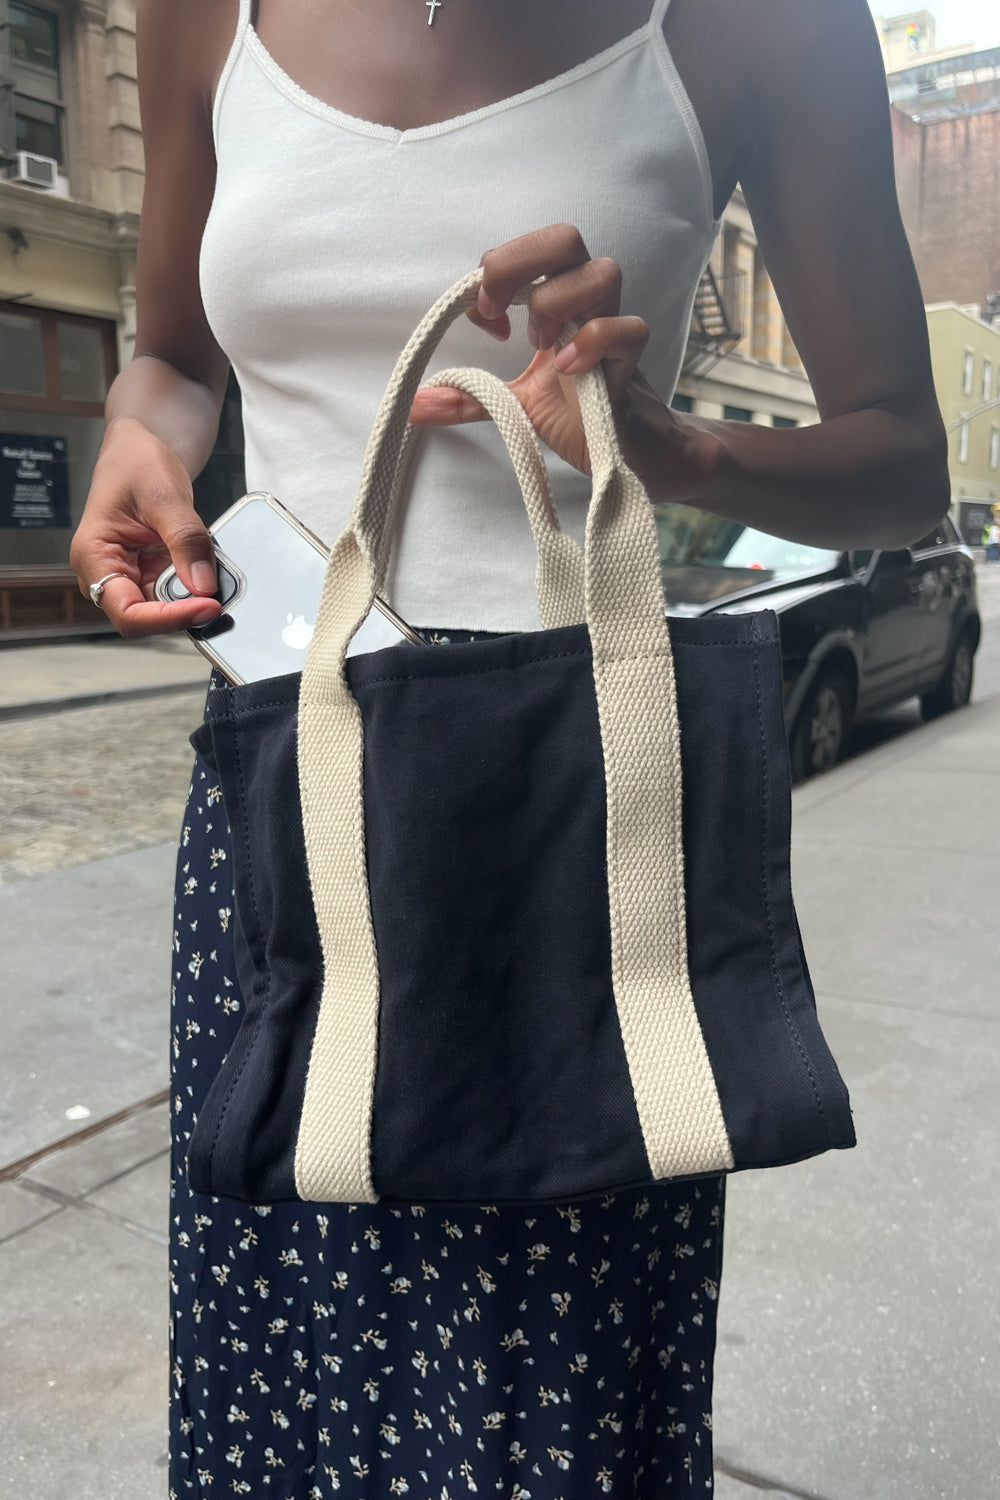 Basic Tote Bag – Brandy Melville